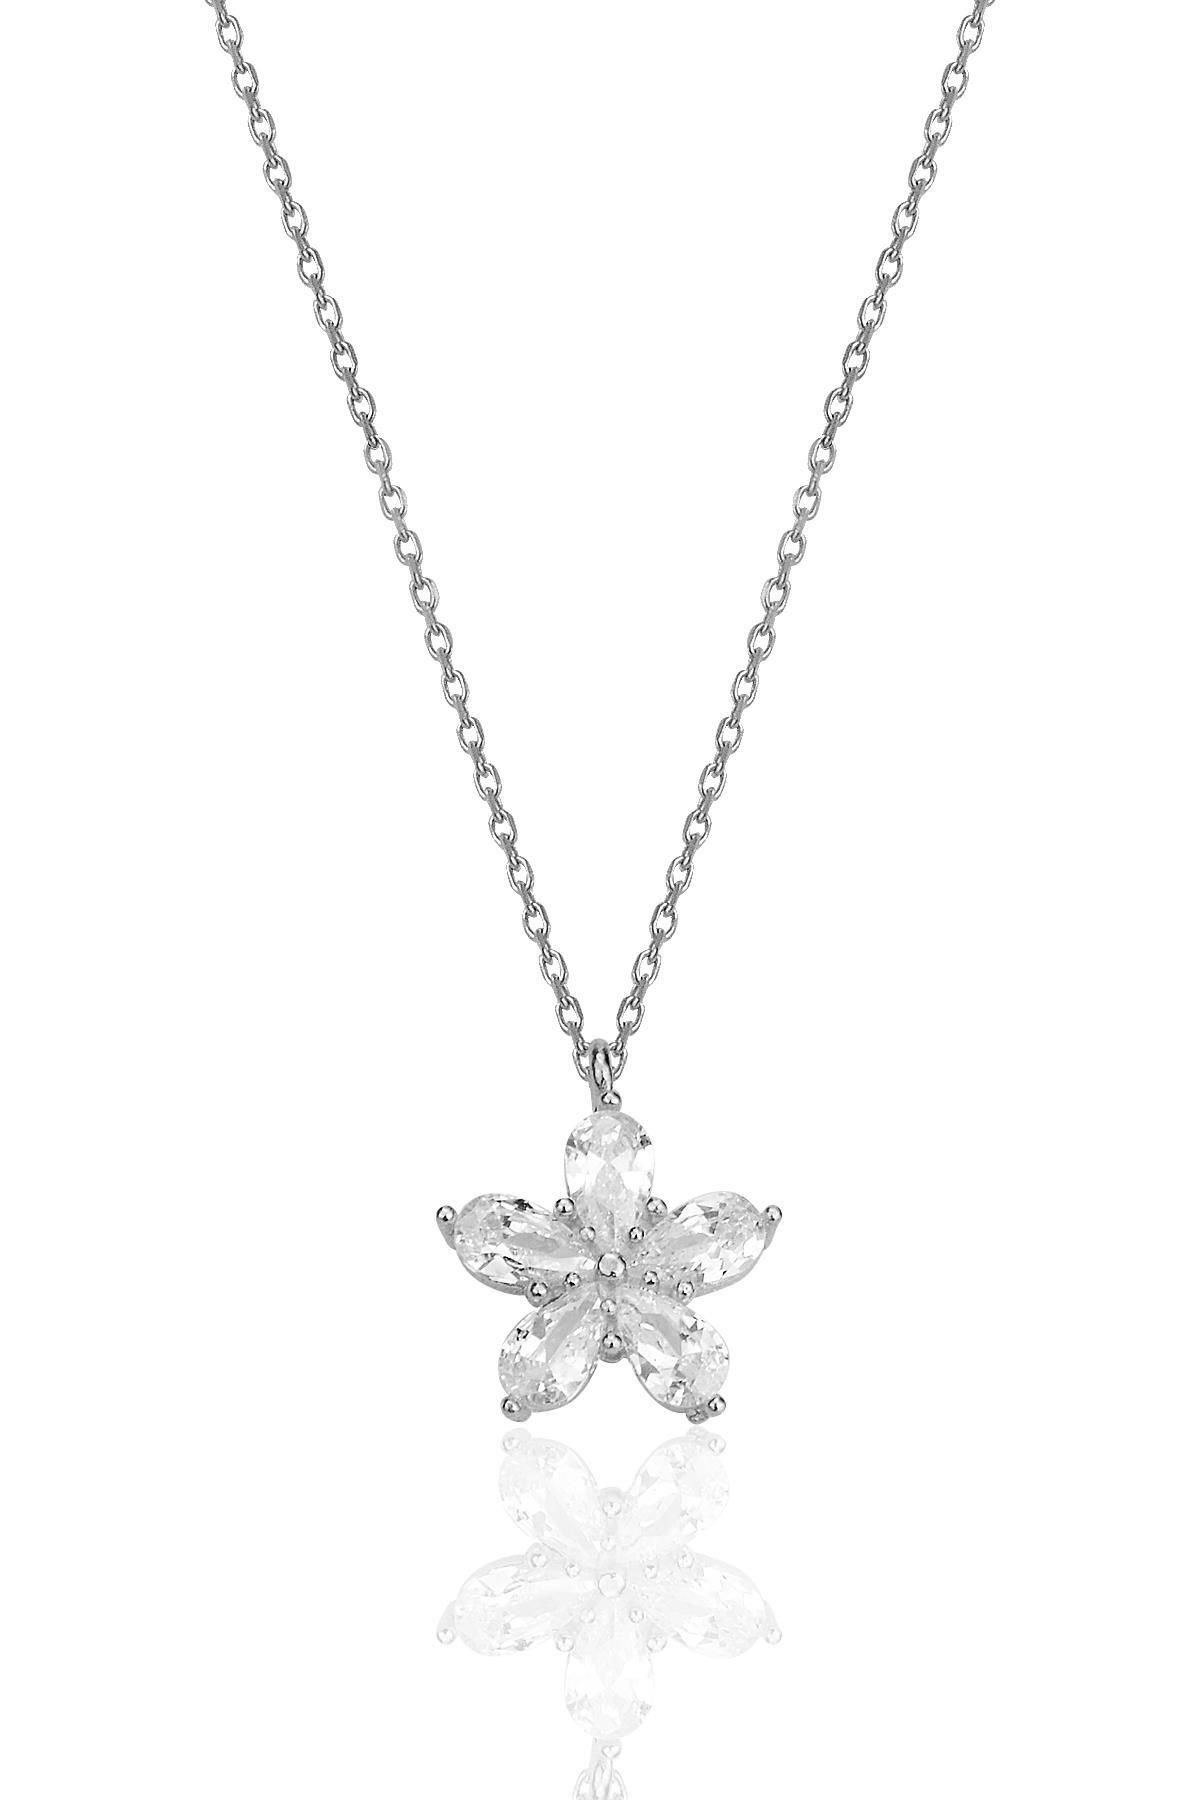 Söğütlü Silver Gümüş rodyumlu damla kesim zirkon taşlı çiçek kolye SGTL12408BEYAZ